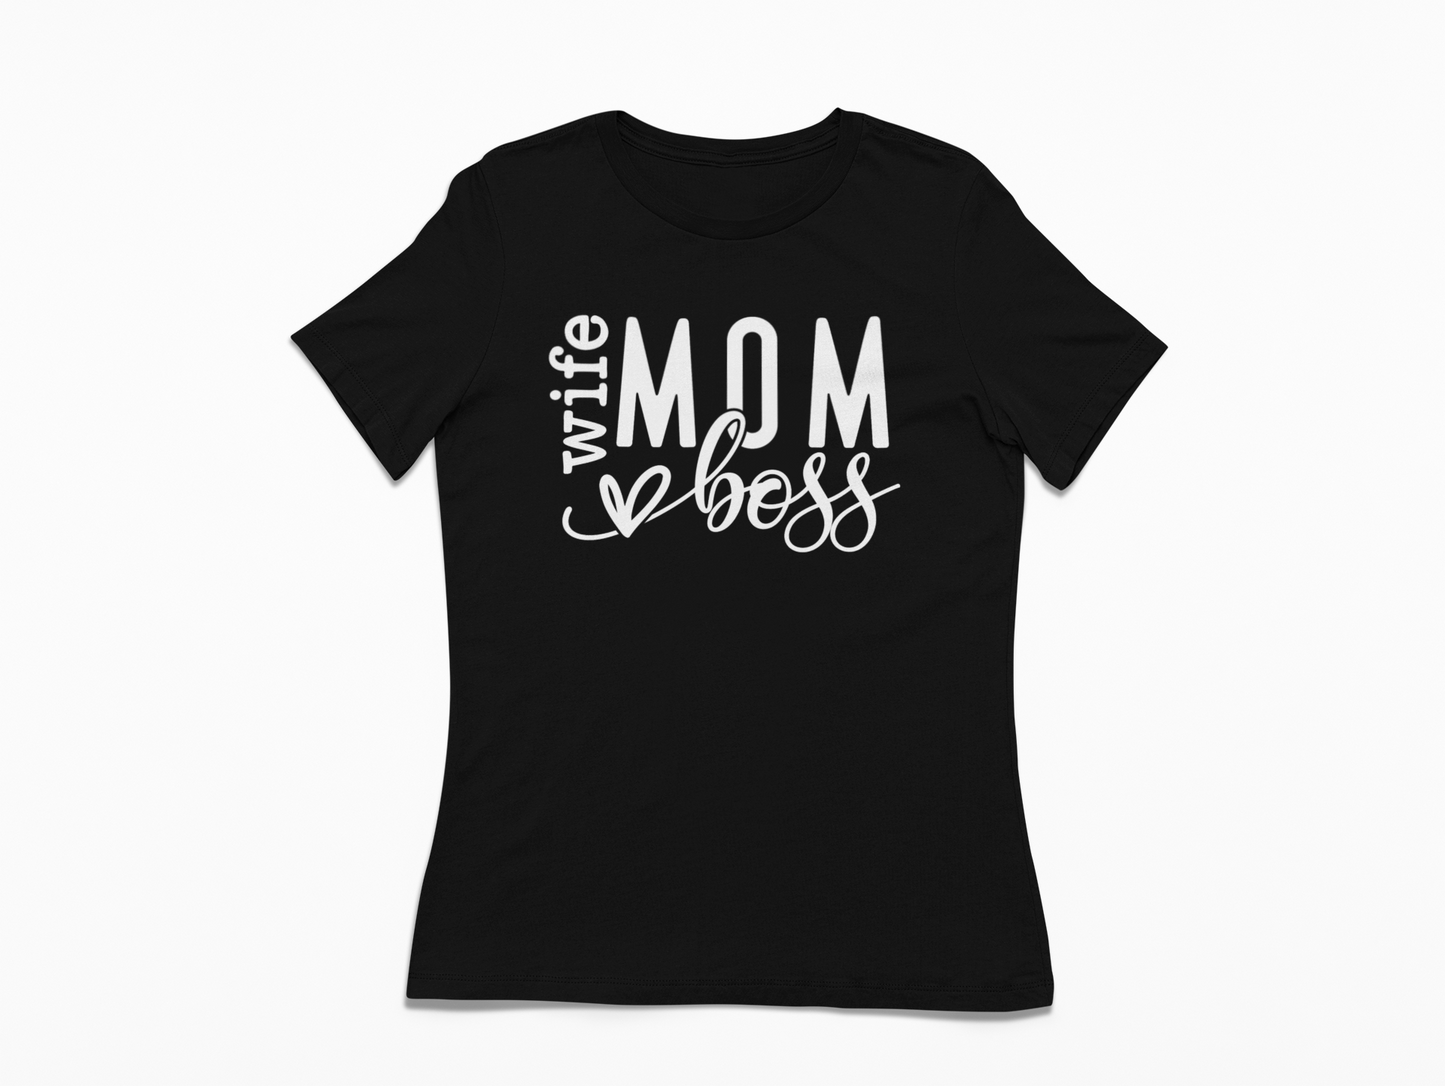 Mom, Wife, Boss